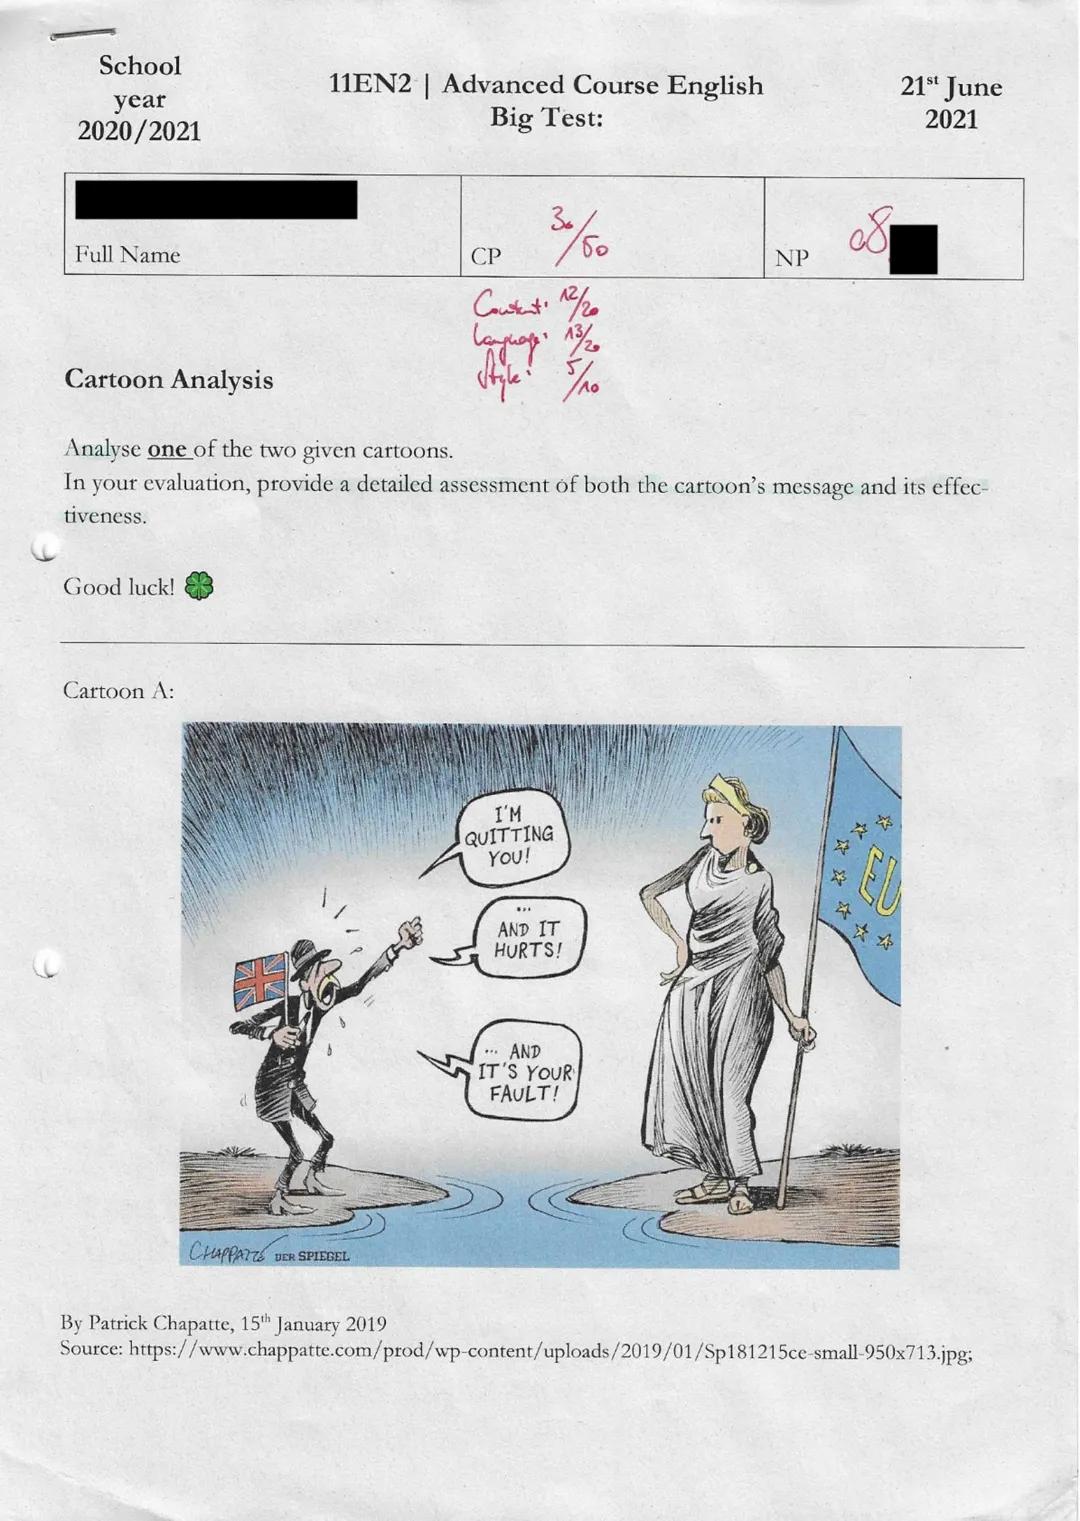 School
year
2020/2021
Full Name
Good luck!
Cartoon A:
11EN2 | Advanced Course English
Big Test:
Снаррачче о
Cartoon Analysis
Analyse one of 